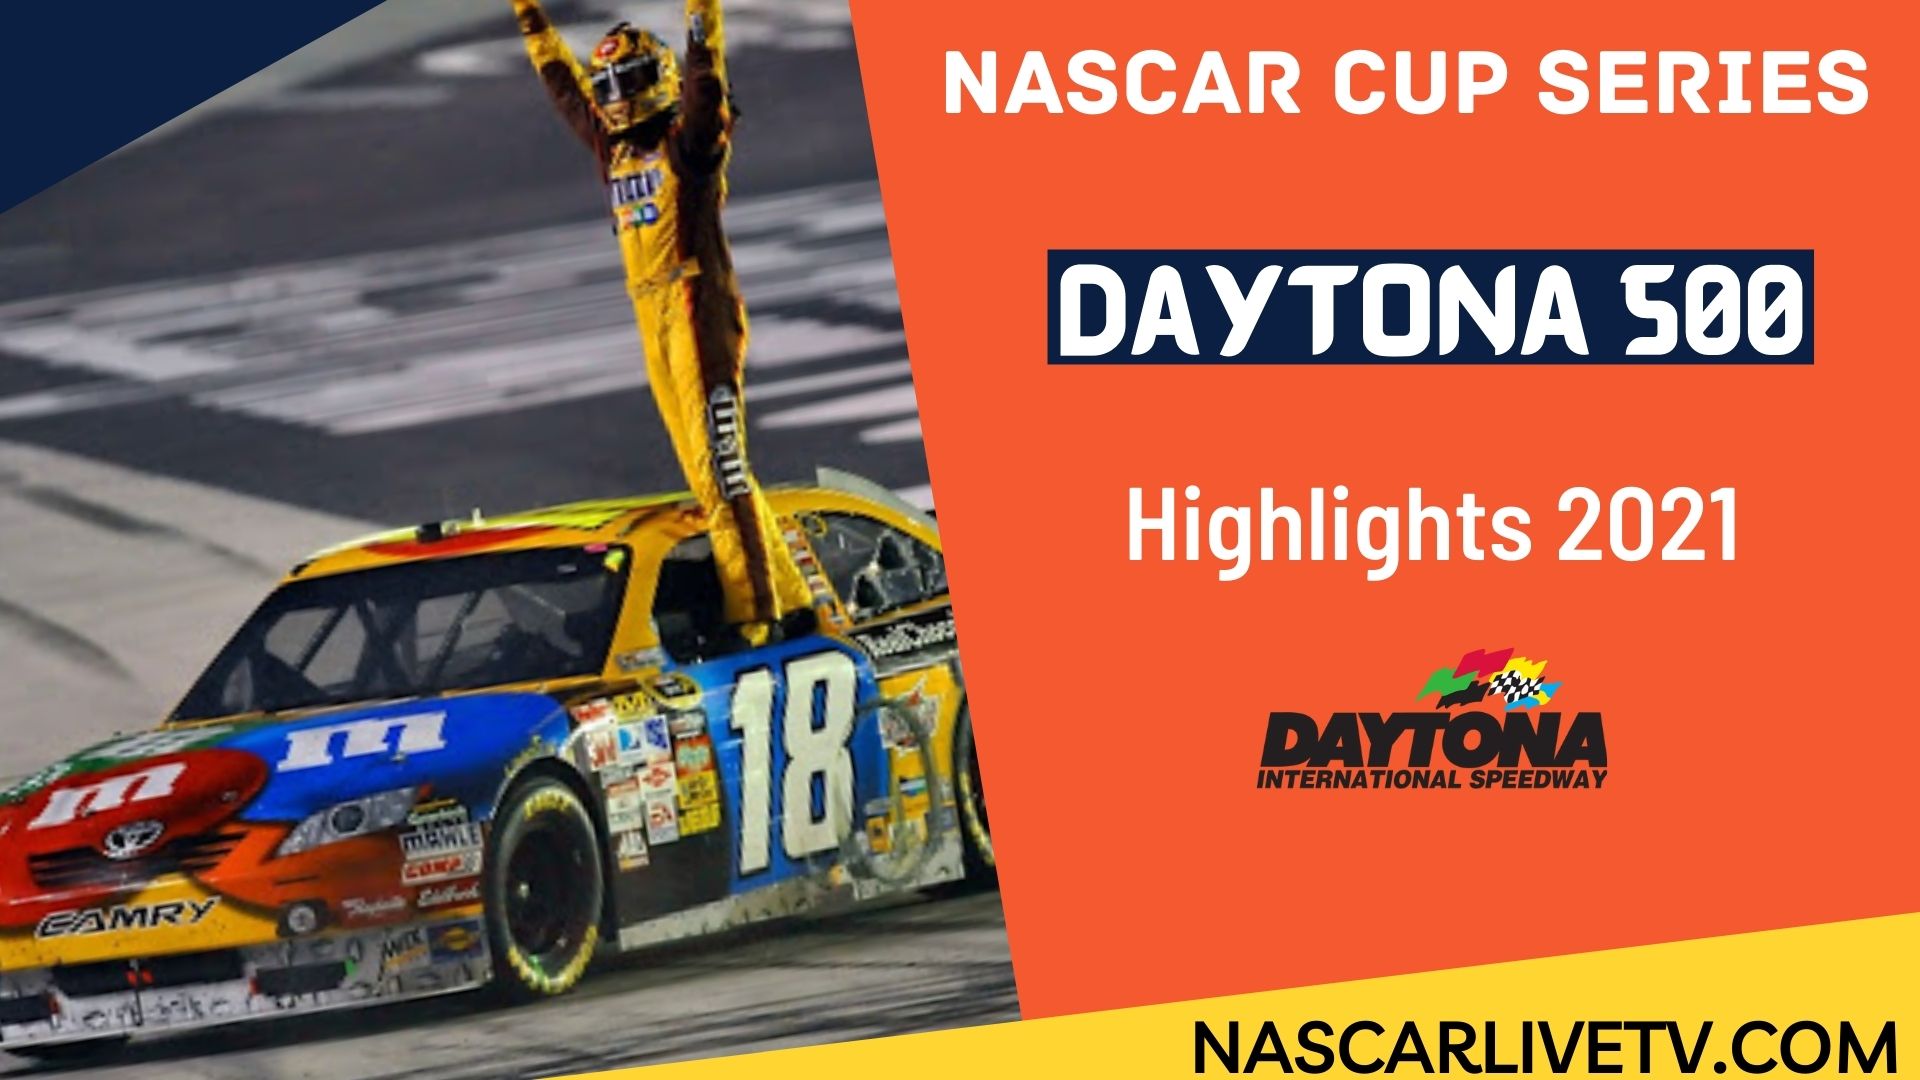 Daytona 500 NASCAR Cup Series Highlights 2021